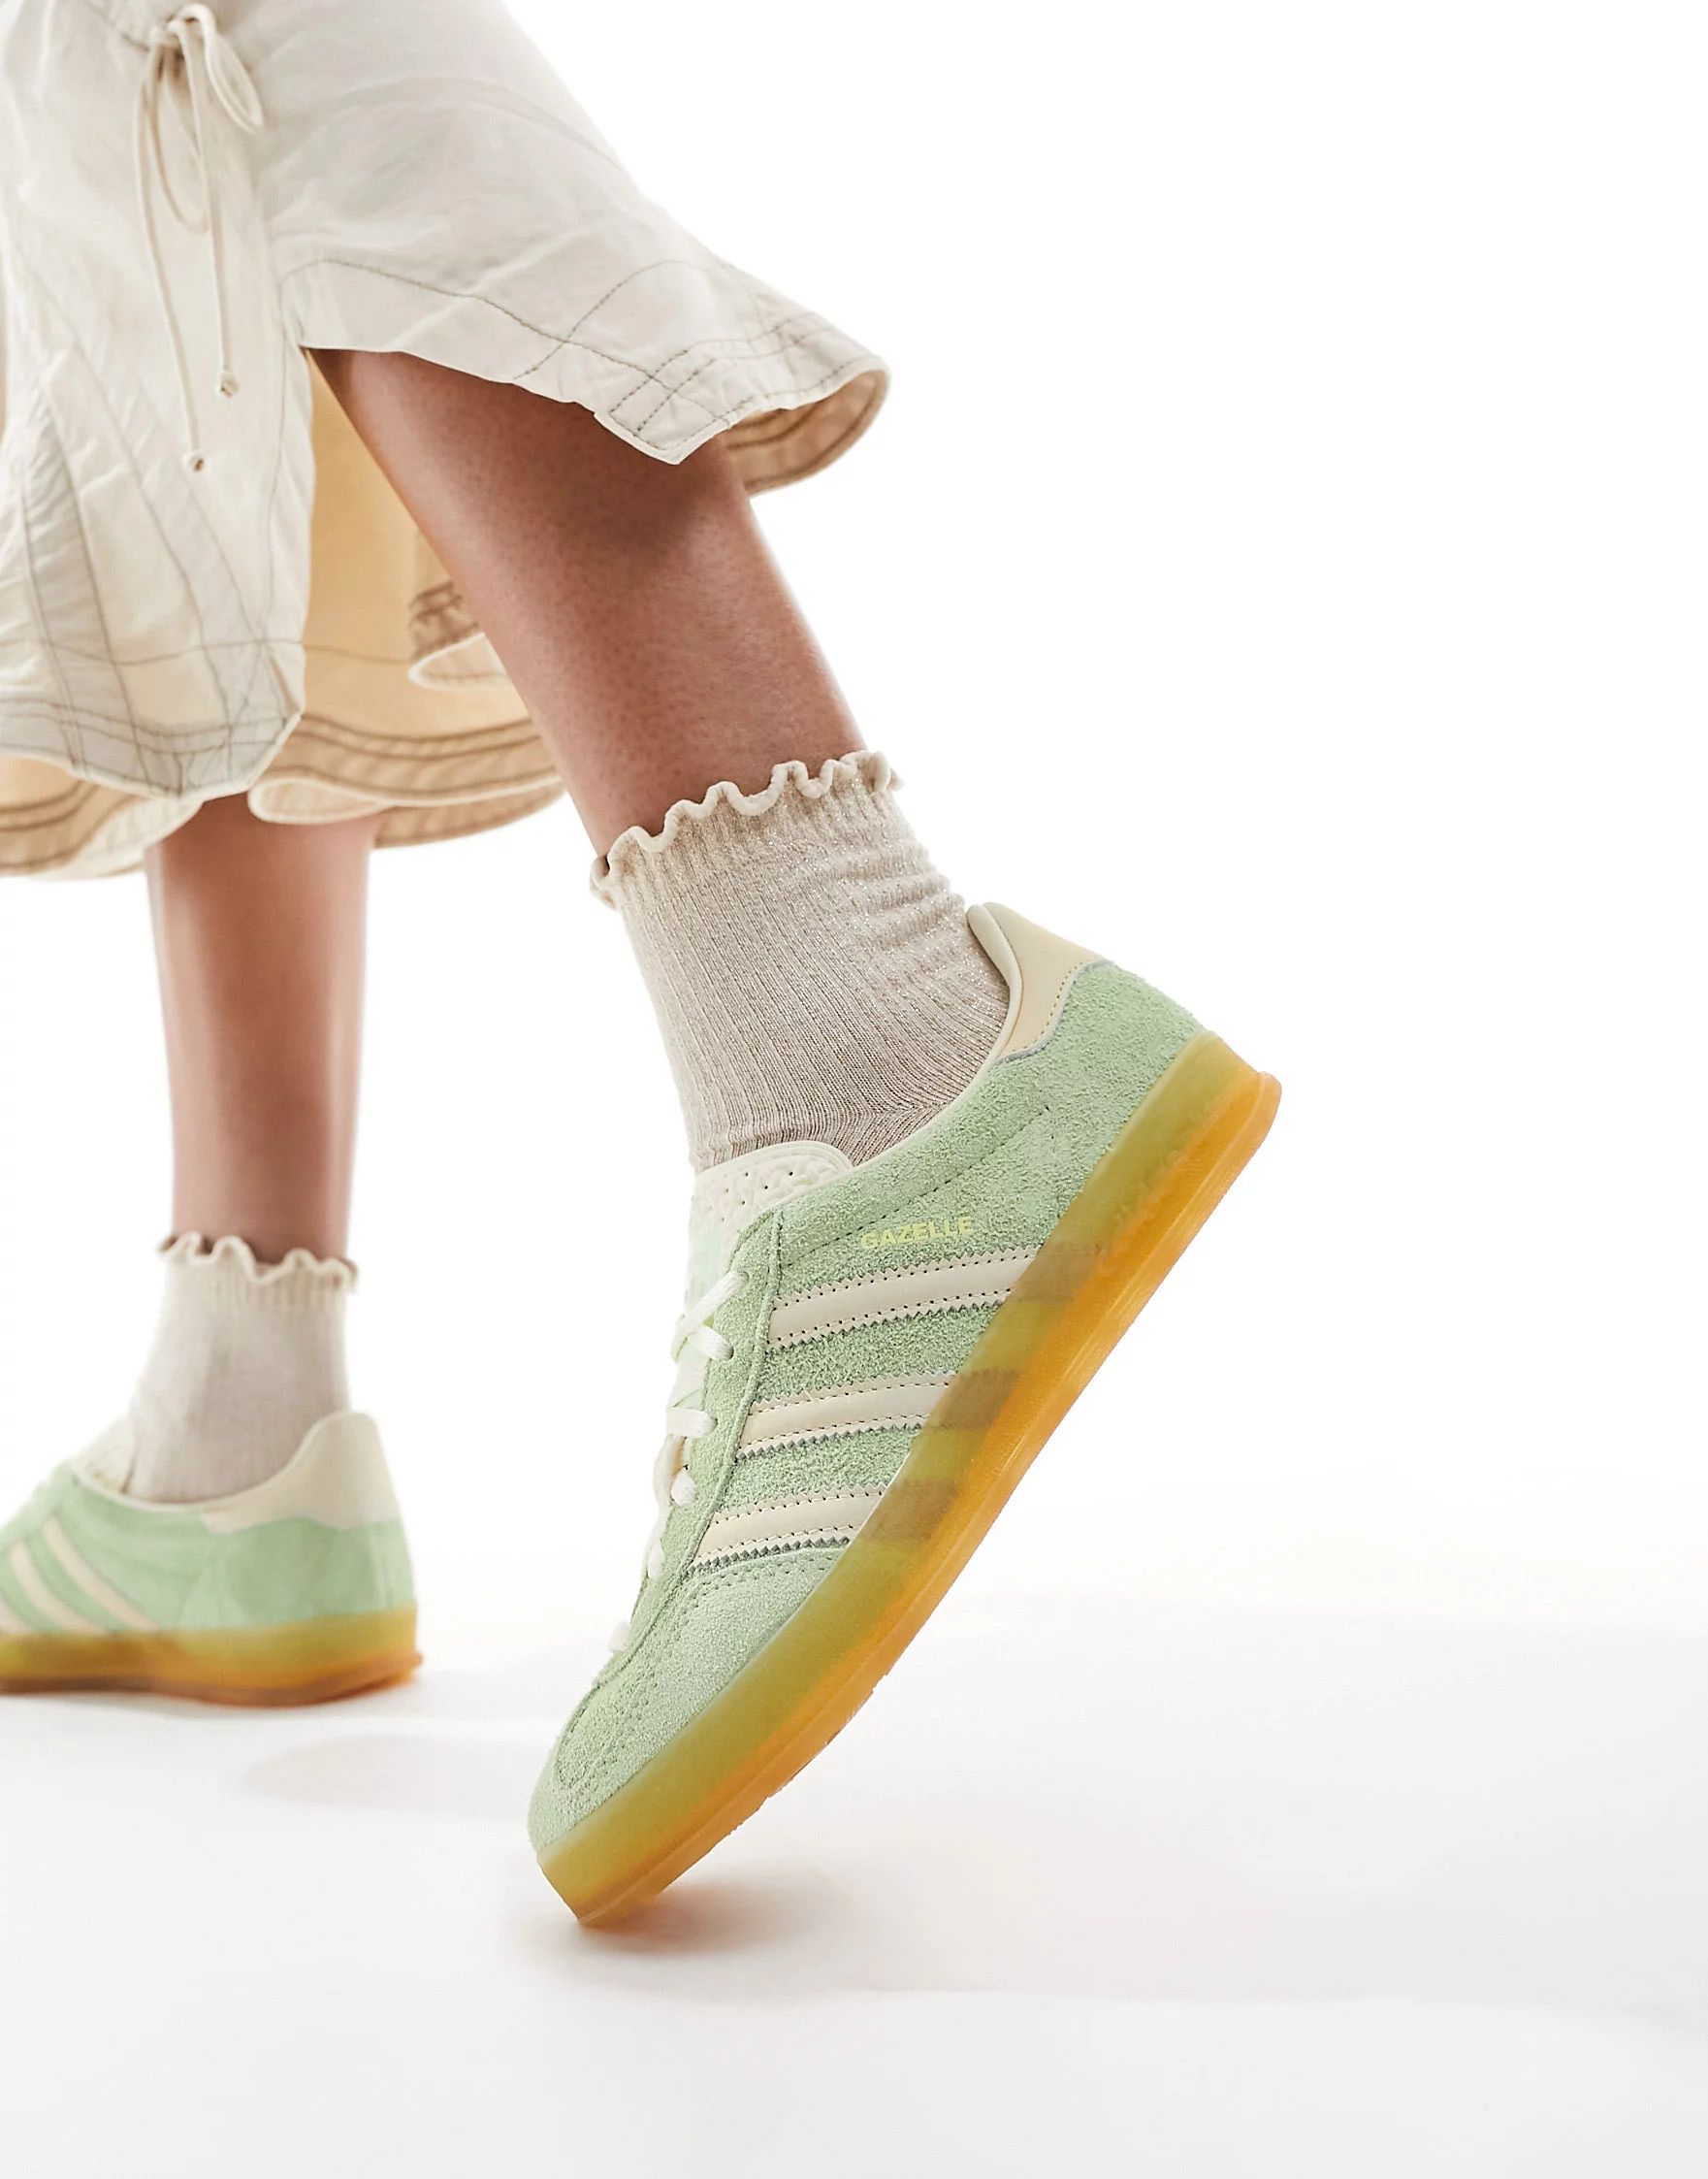 adidas Originals Gazelle Indoor gum sole sneakers in green and white | ASOS | ASOS (Global)